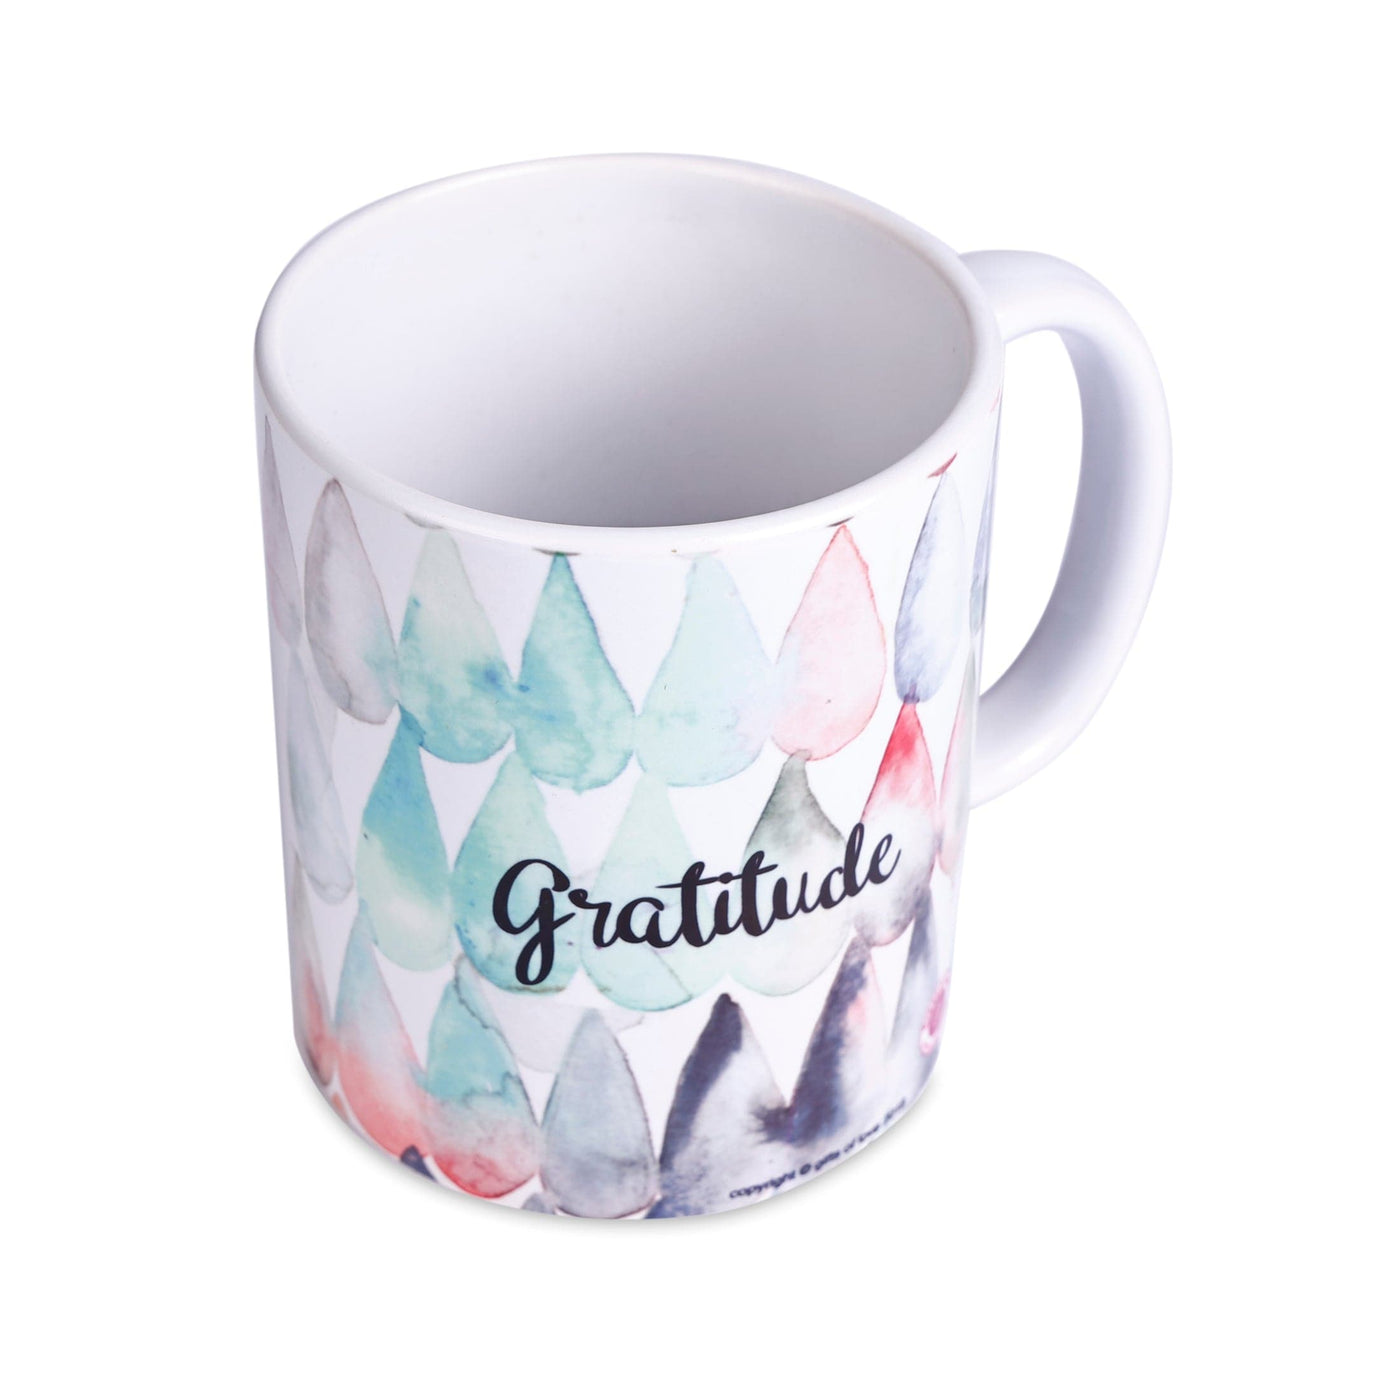 Gifts of Love Corporate Gifting Coffee Mugs